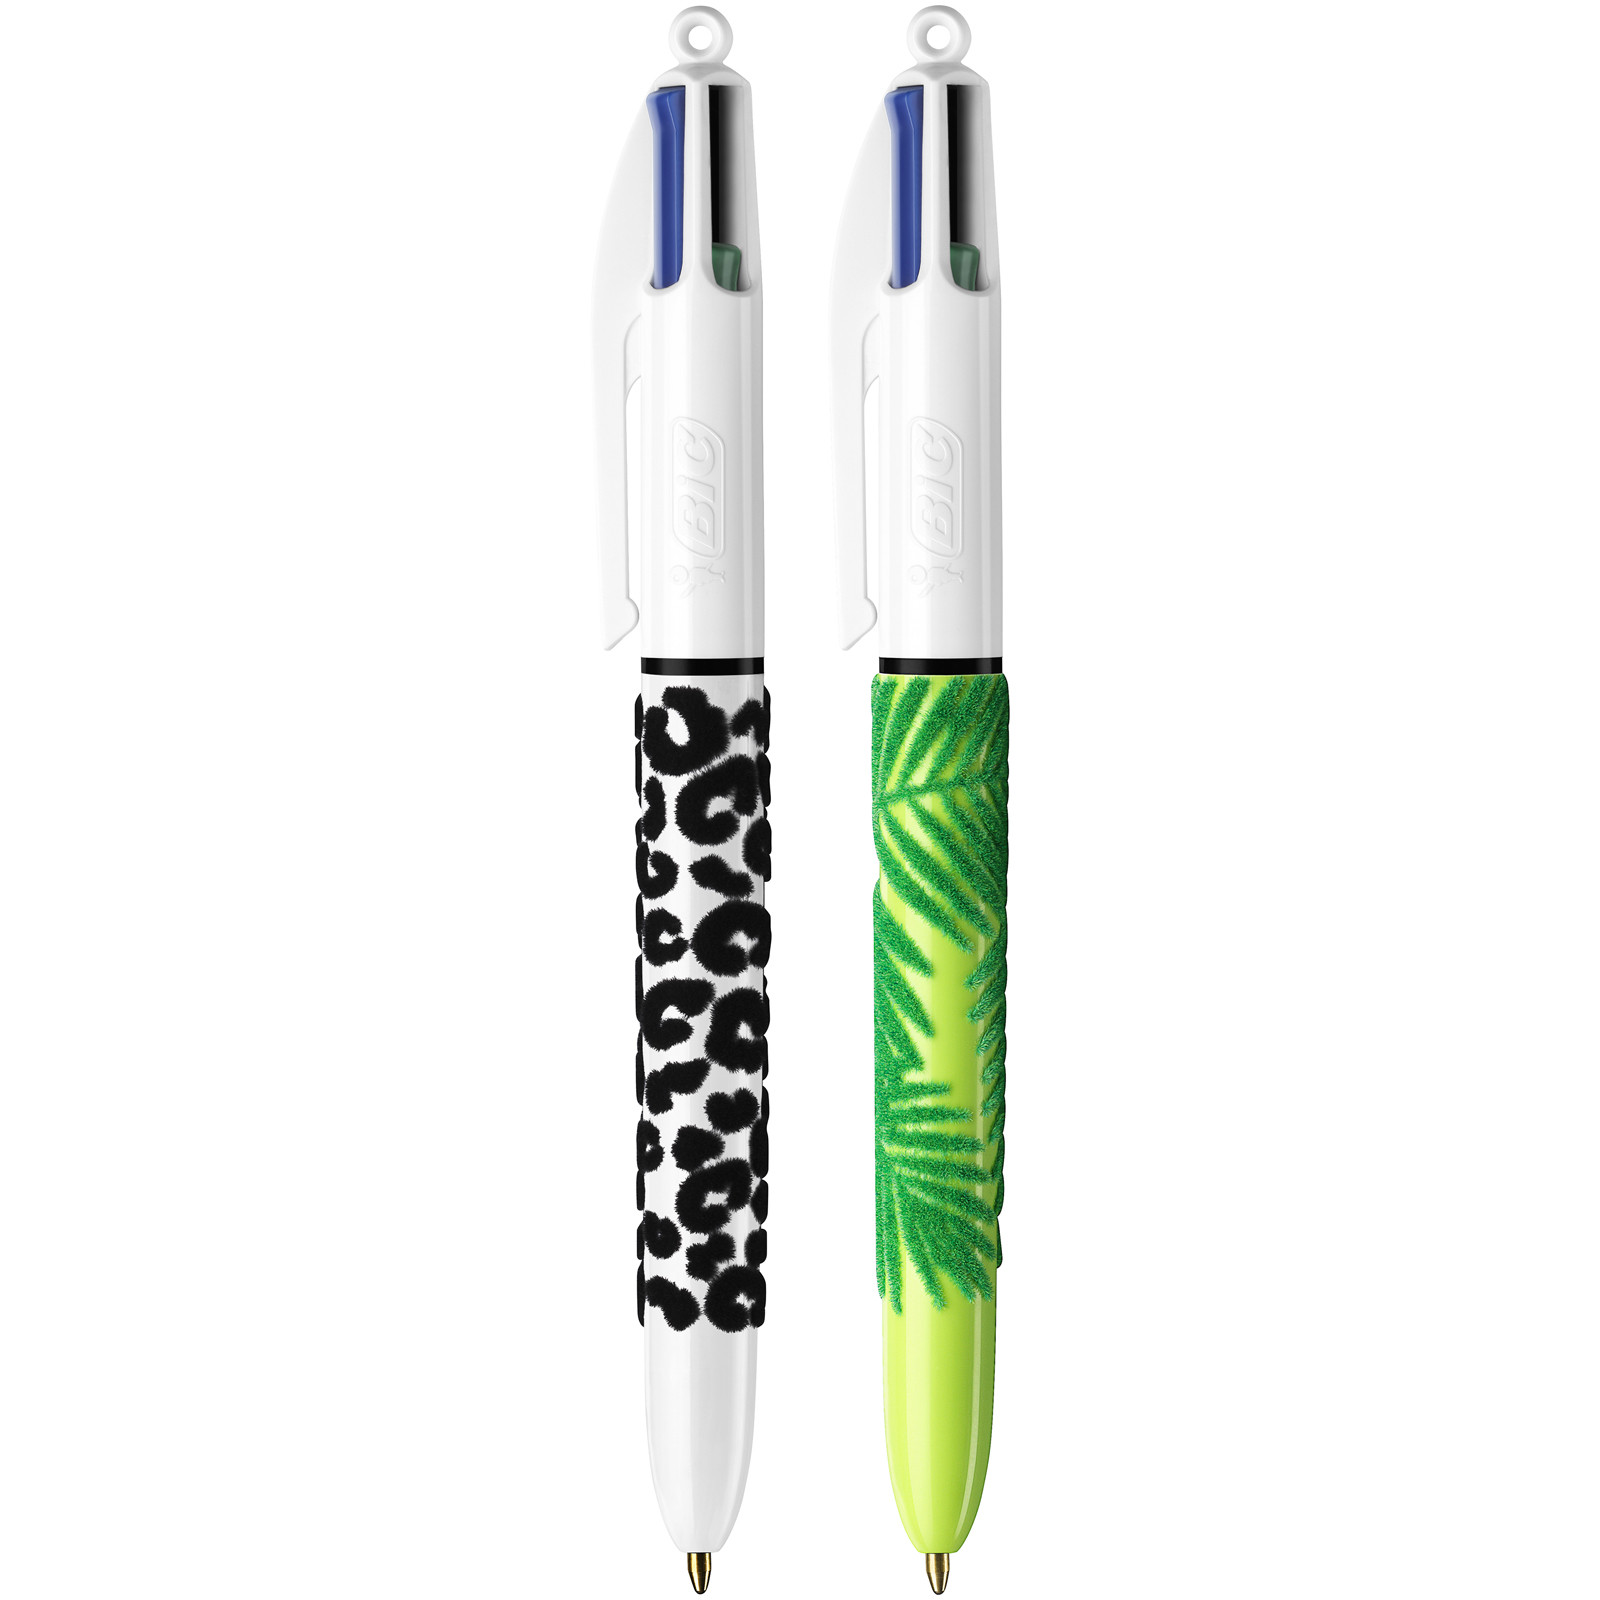 BIC Recharge pour stylo à bille 4 COULEURS pointe moyenne verte 0,5 mm